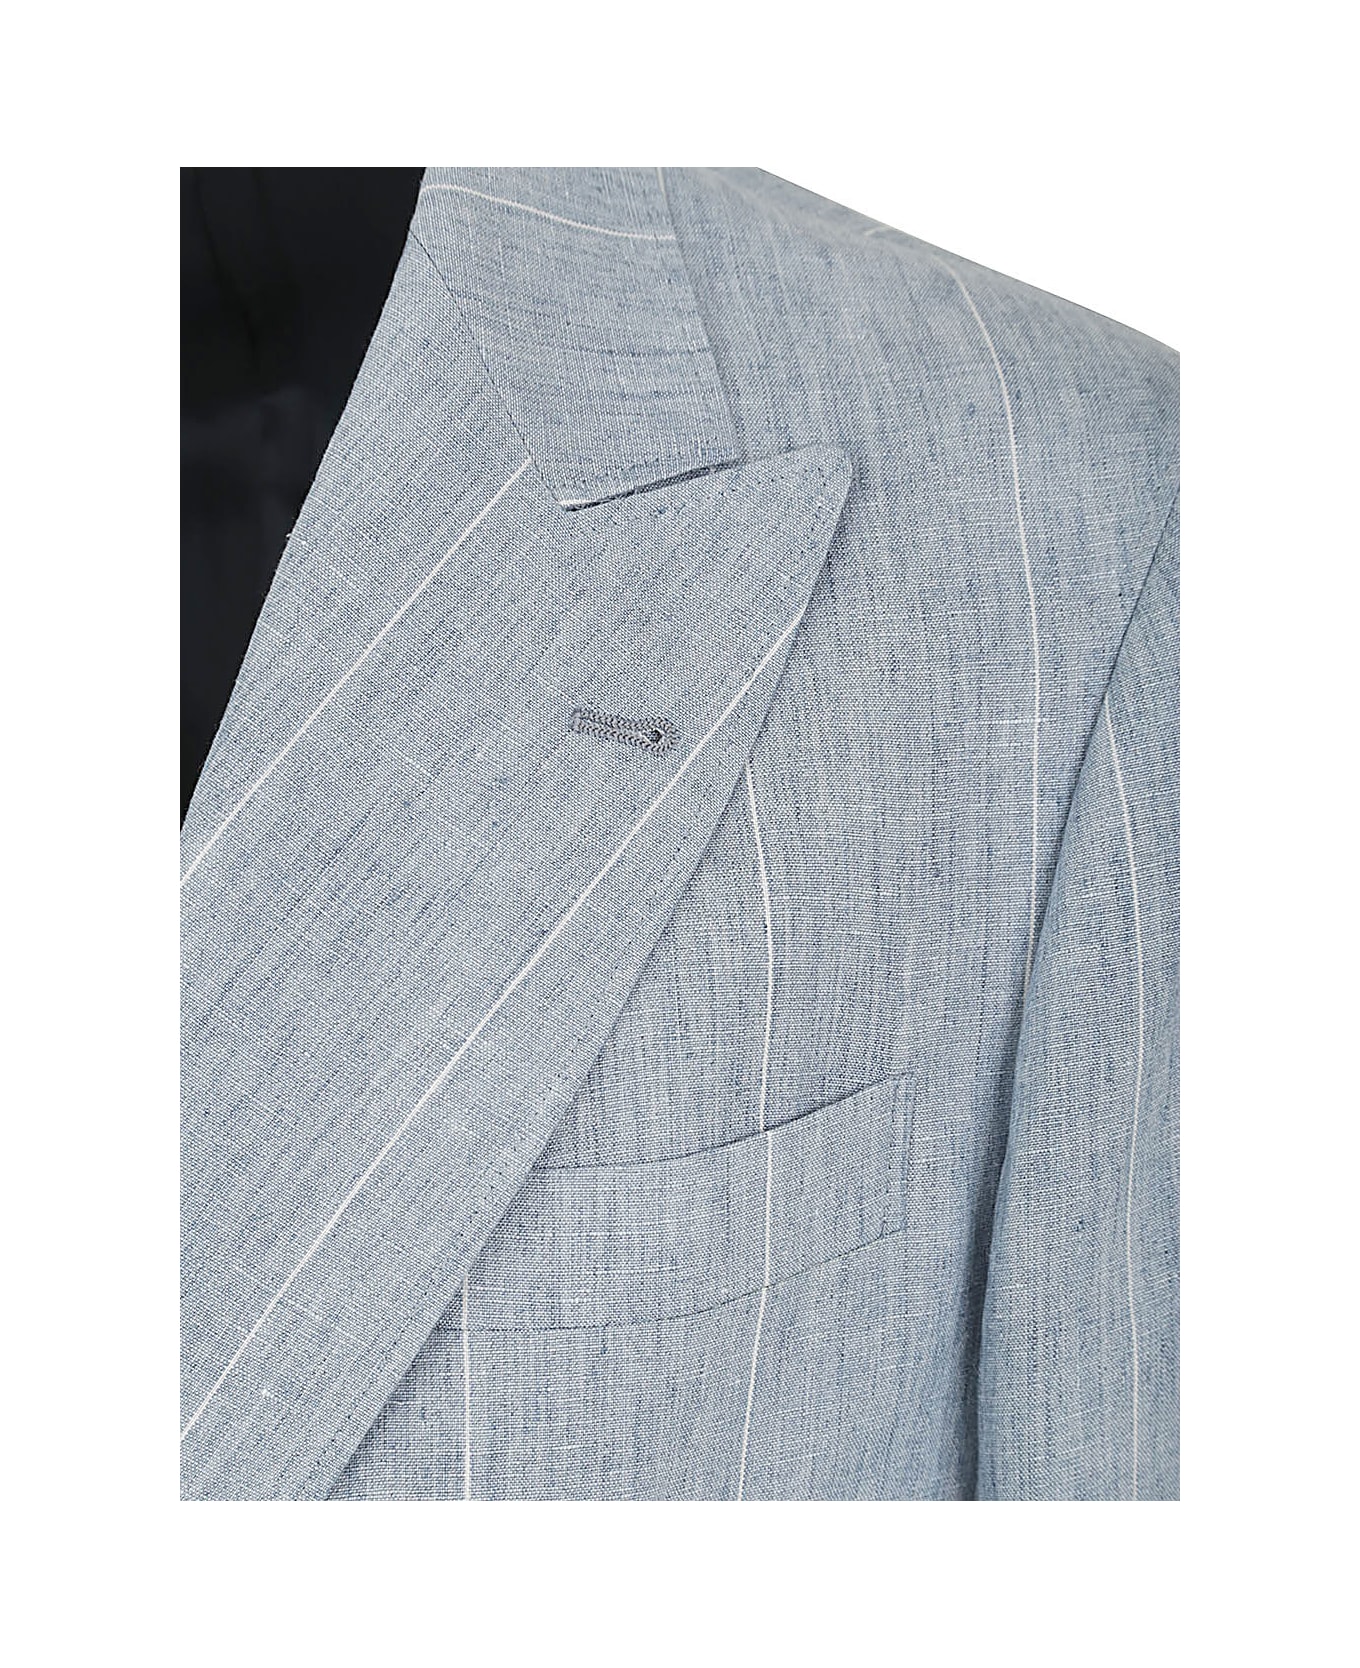 Brunello Cucinelli Suit Type Jacket - Celestial